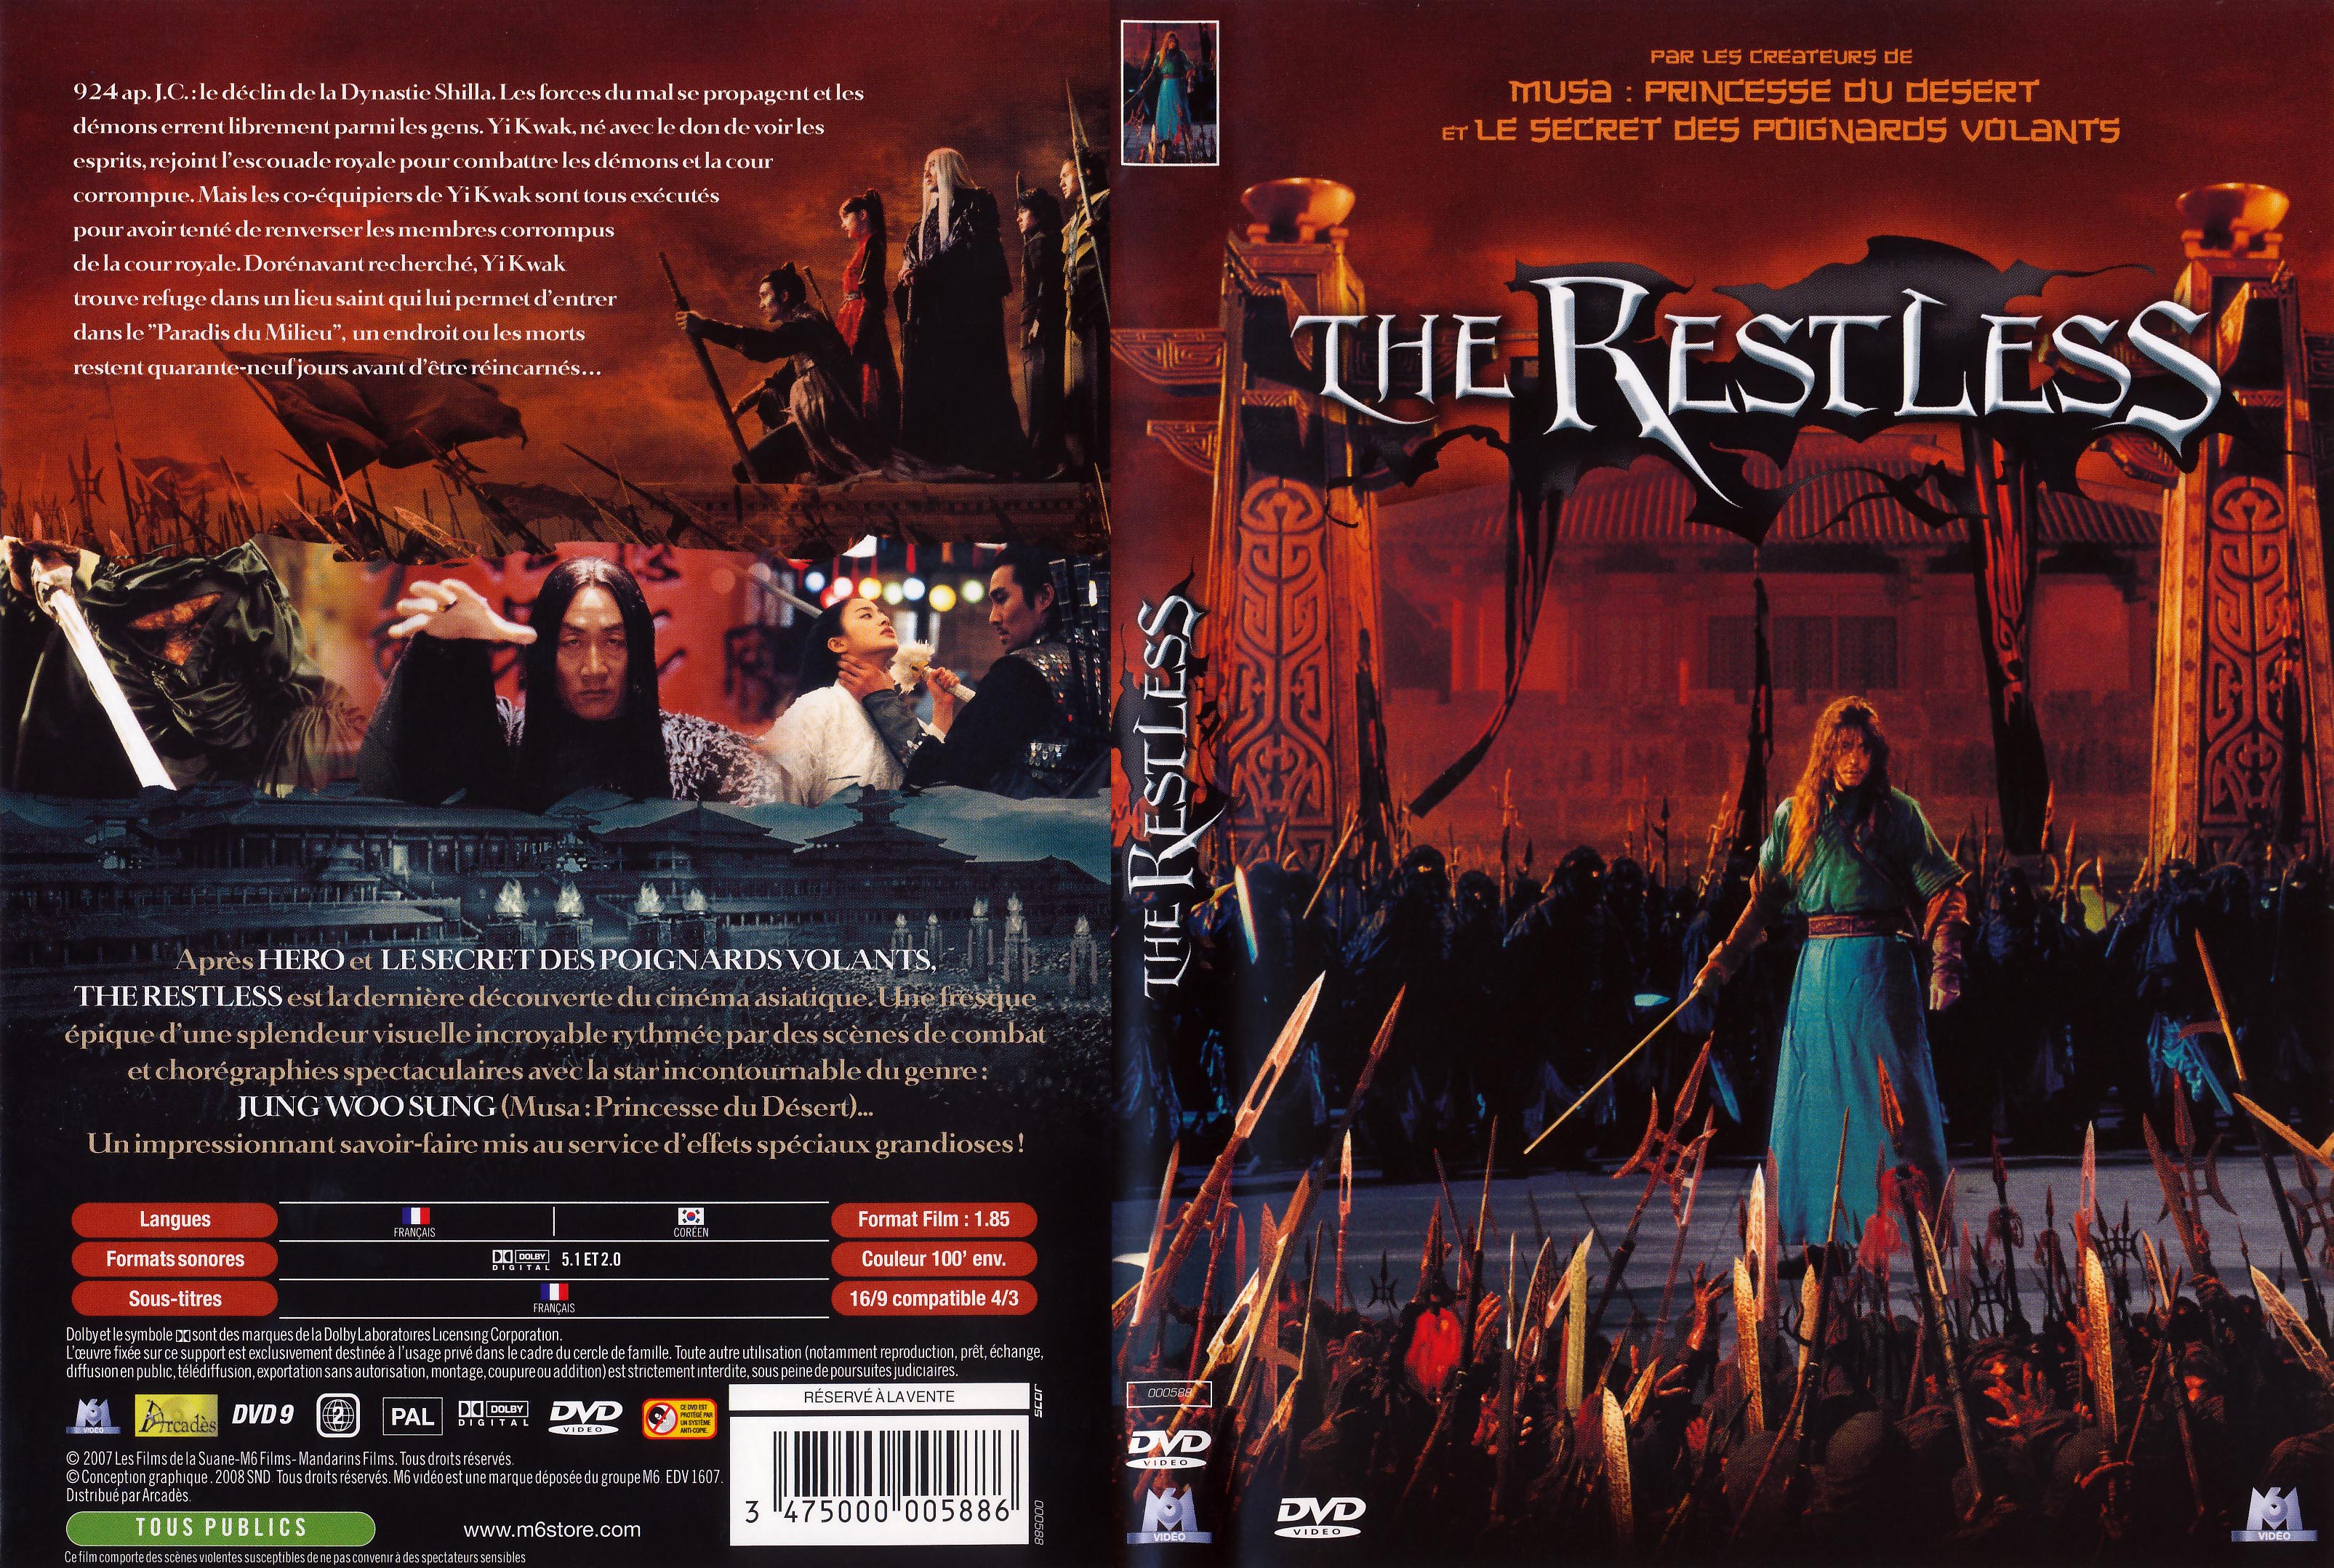 Jaquette DVD The restless v3